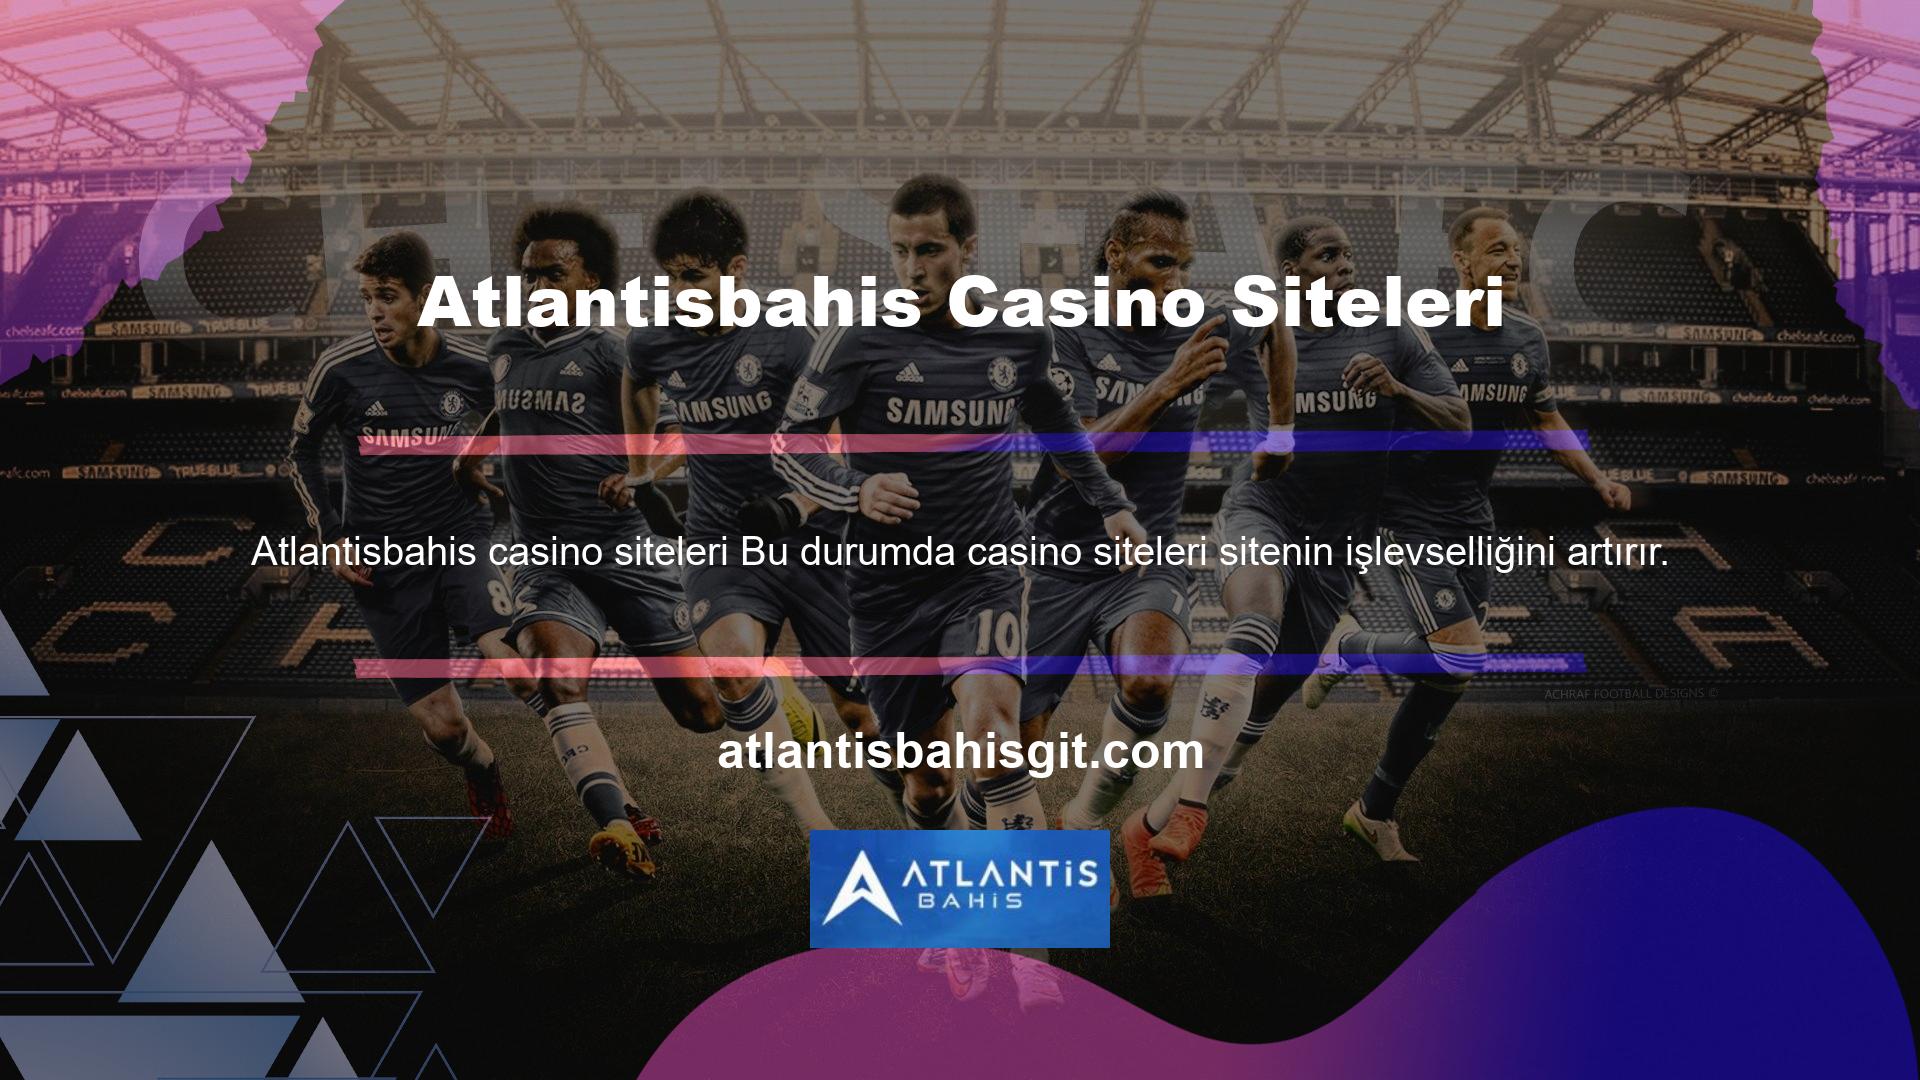 Atlantisbahis casino siteleri